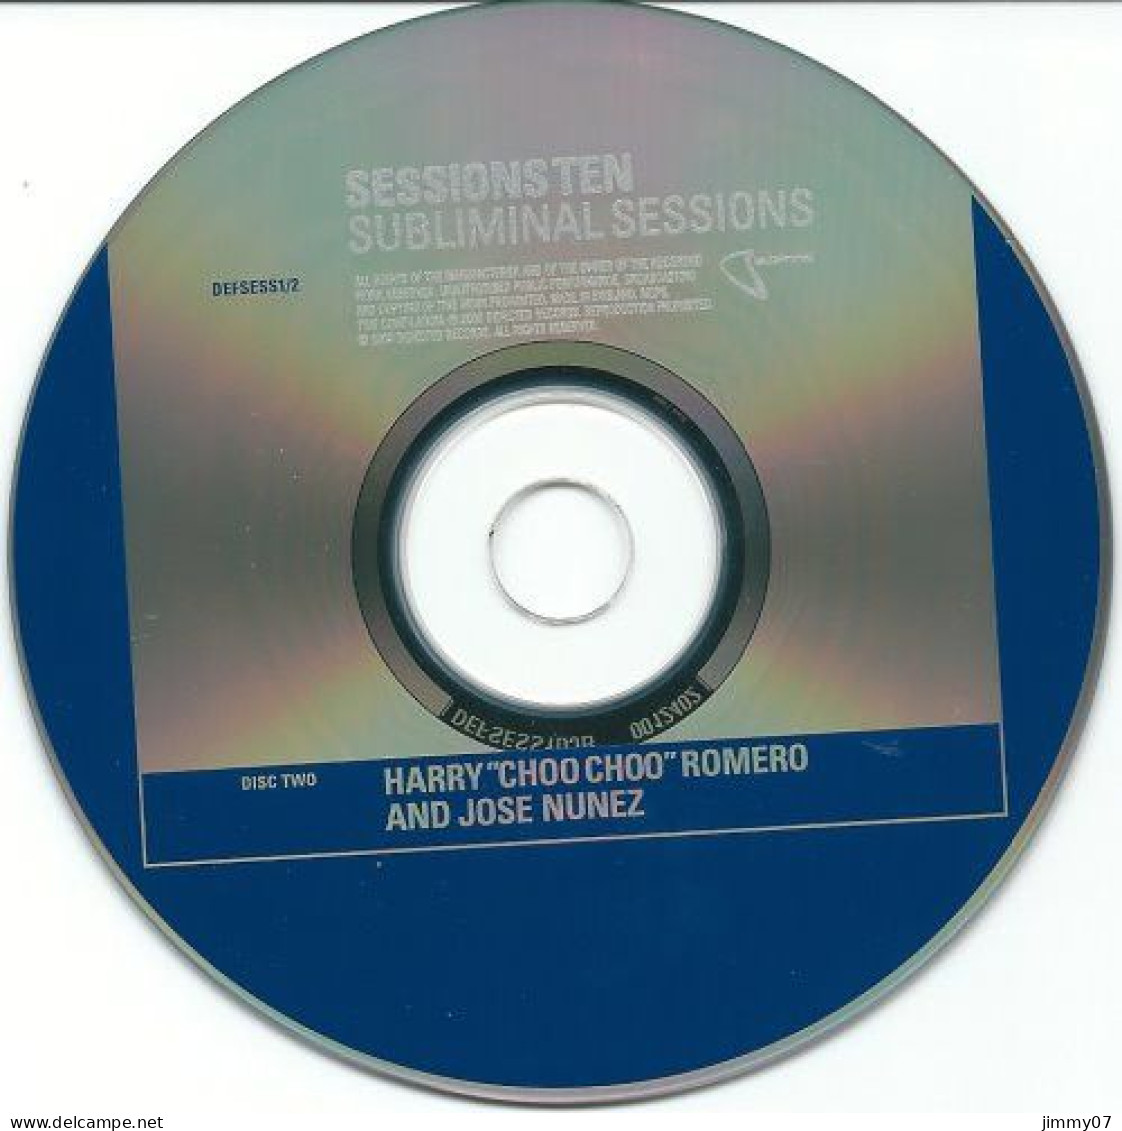 Erick Morillo, Harry "Choo Choo" Romero & Jose Nunez - Sessions Ten (Subliminal Sessions) (2xCD, Mixed) - Dance, Techno En House